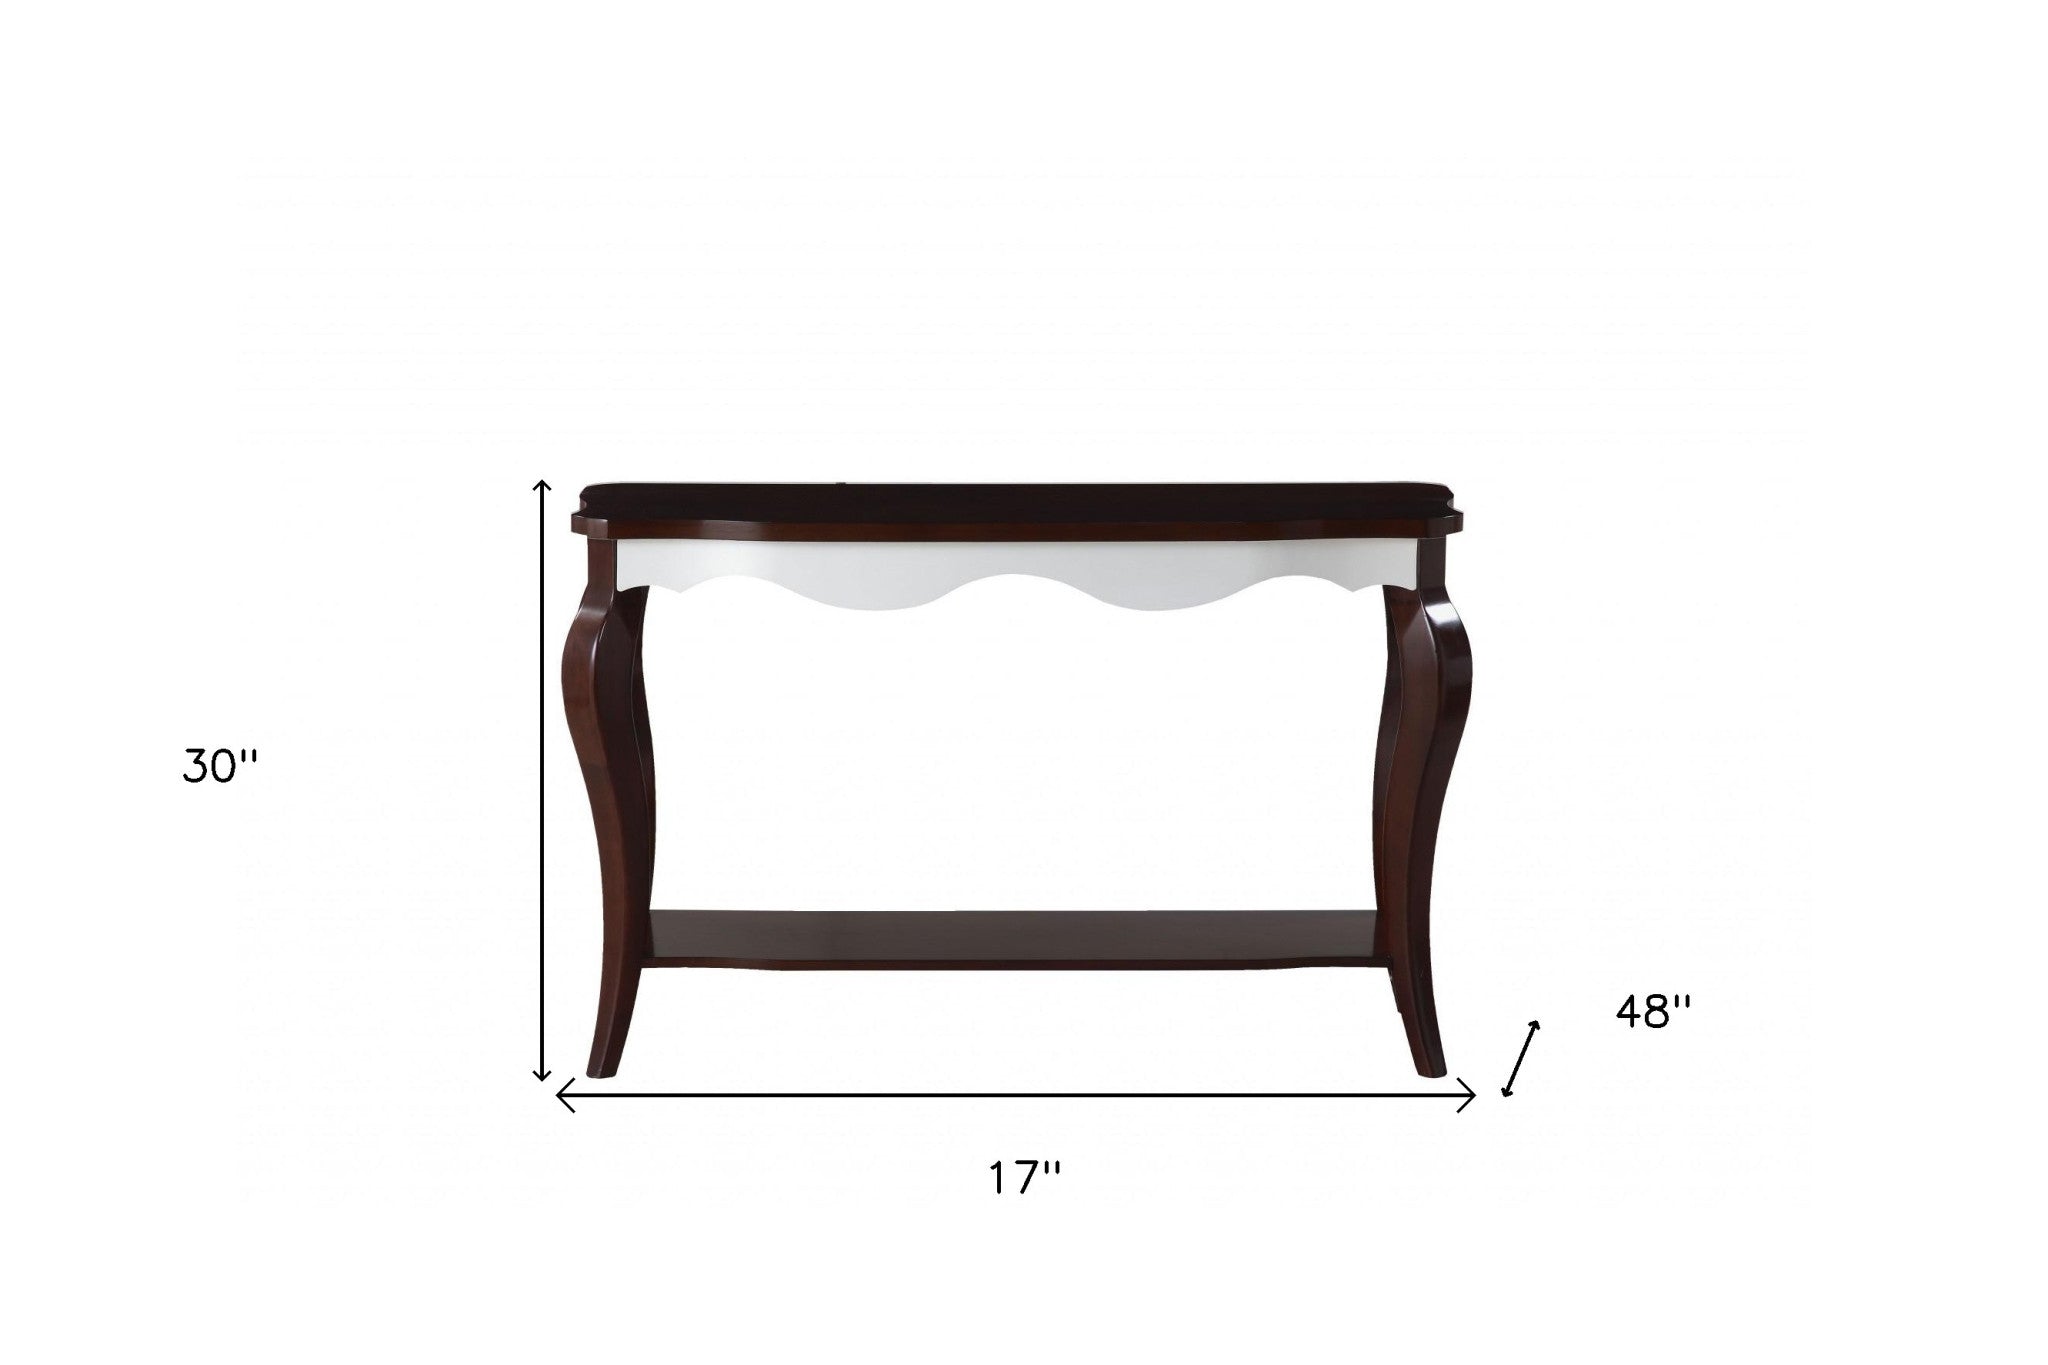 17' X 48' X 30' Walnut White Wood Sofa Table